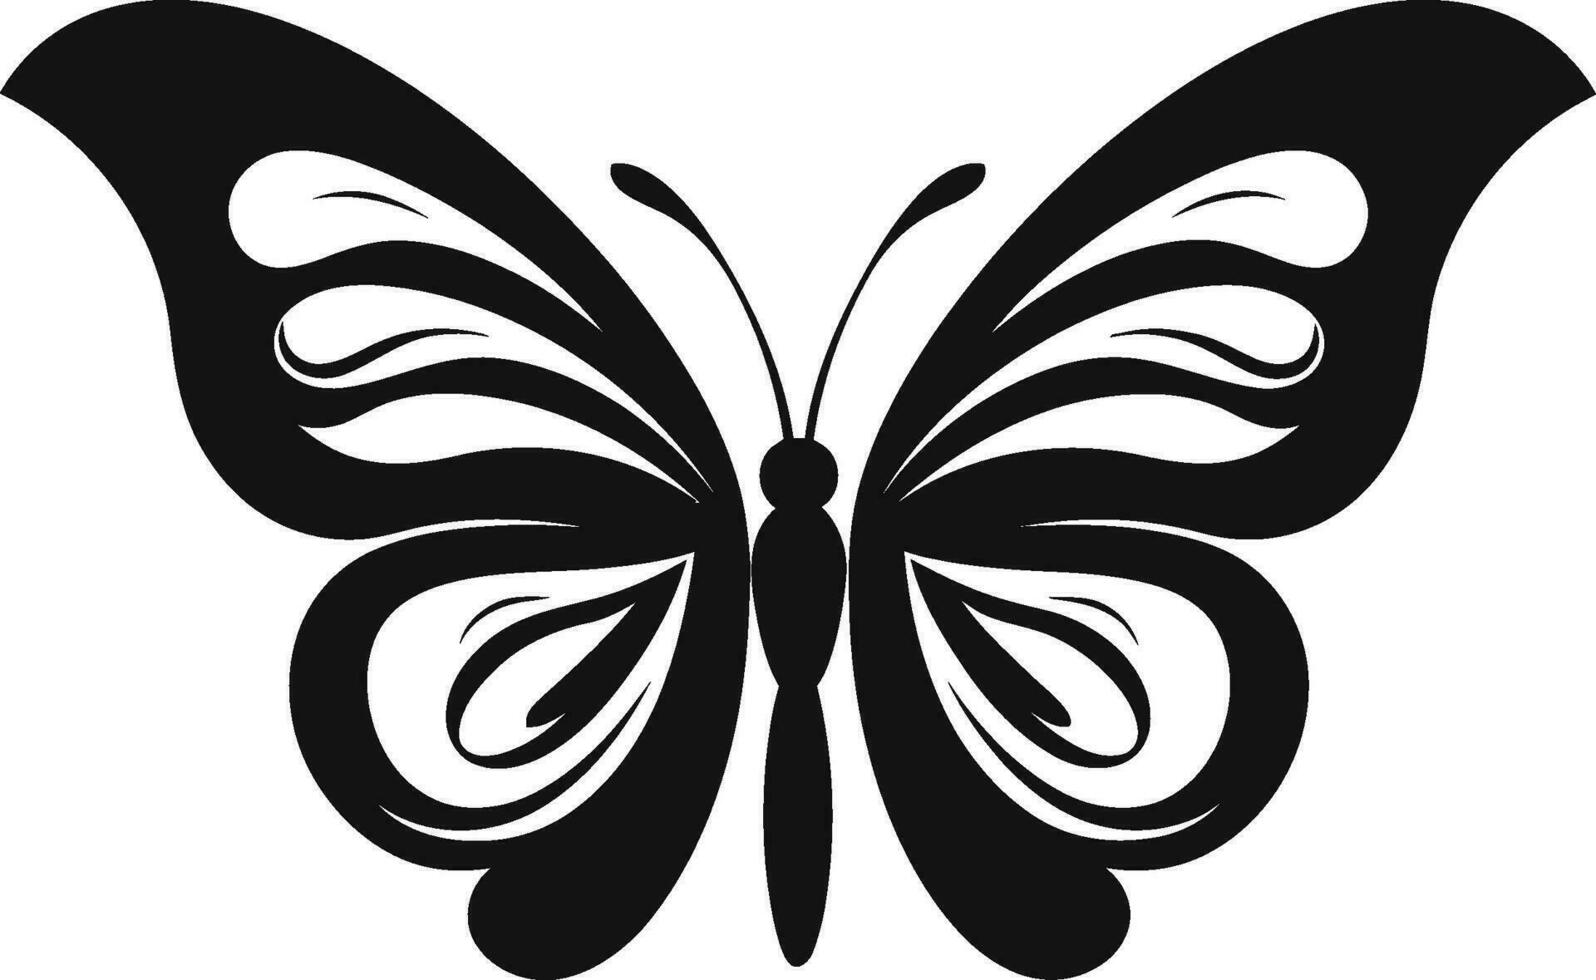 Graceful and Mysterious Black Butterfly Logo Noir Elegance in Flight Butterfly Emblem vector